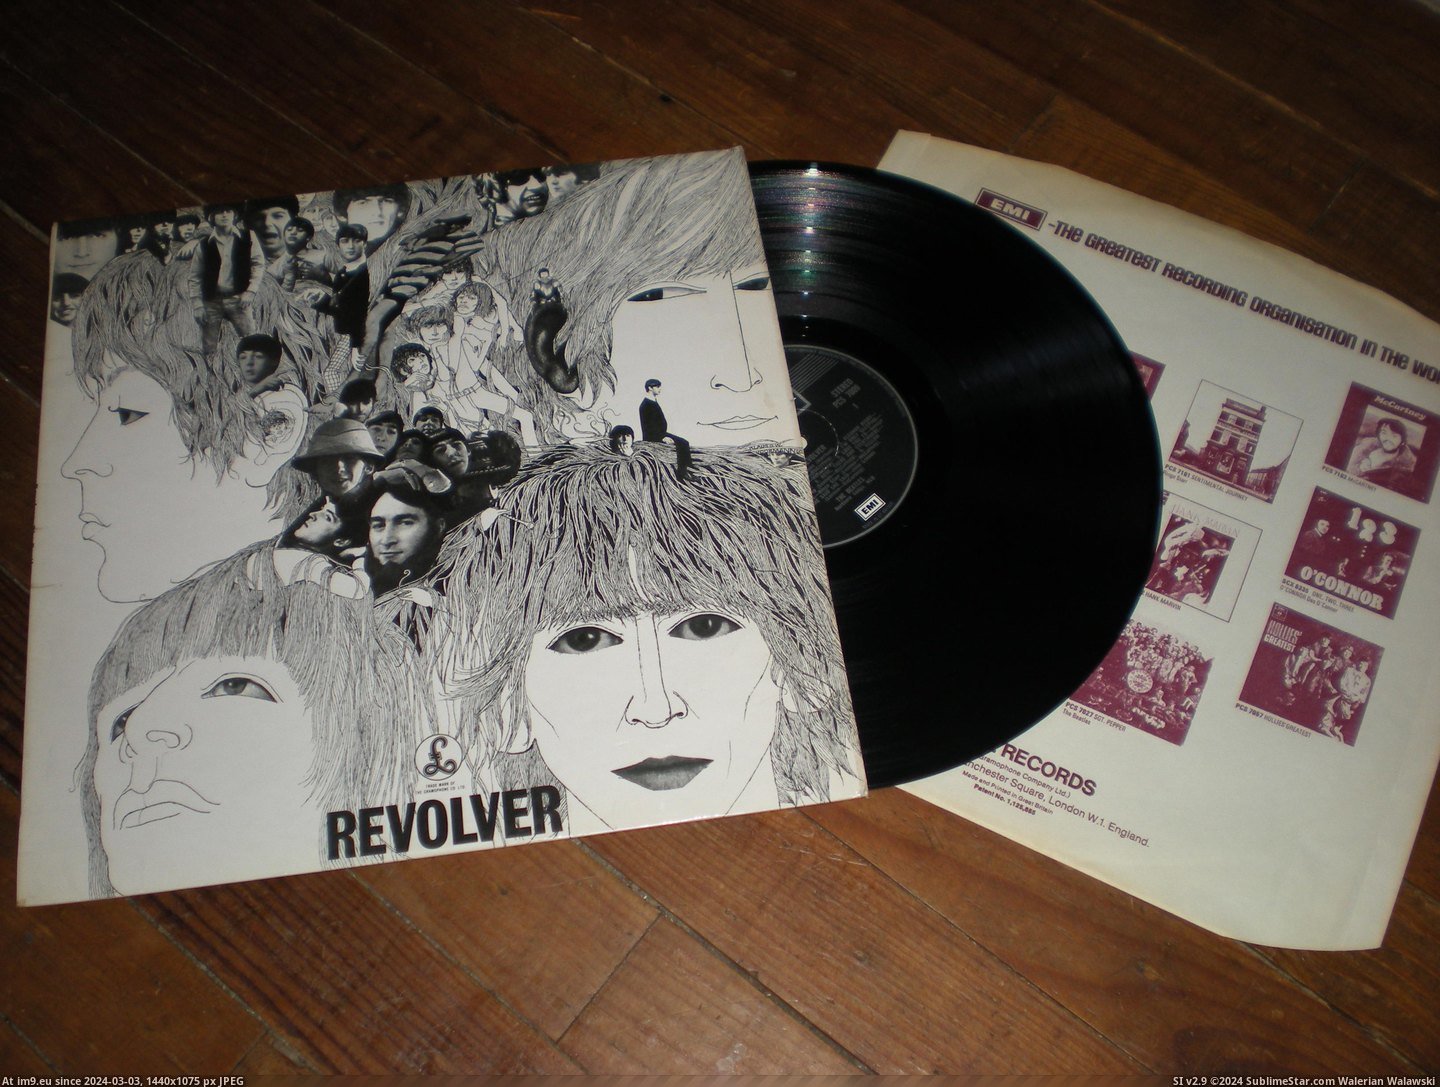  #Revolver  Revolver 19-11 Pic. (Изображение из альбом new 1))